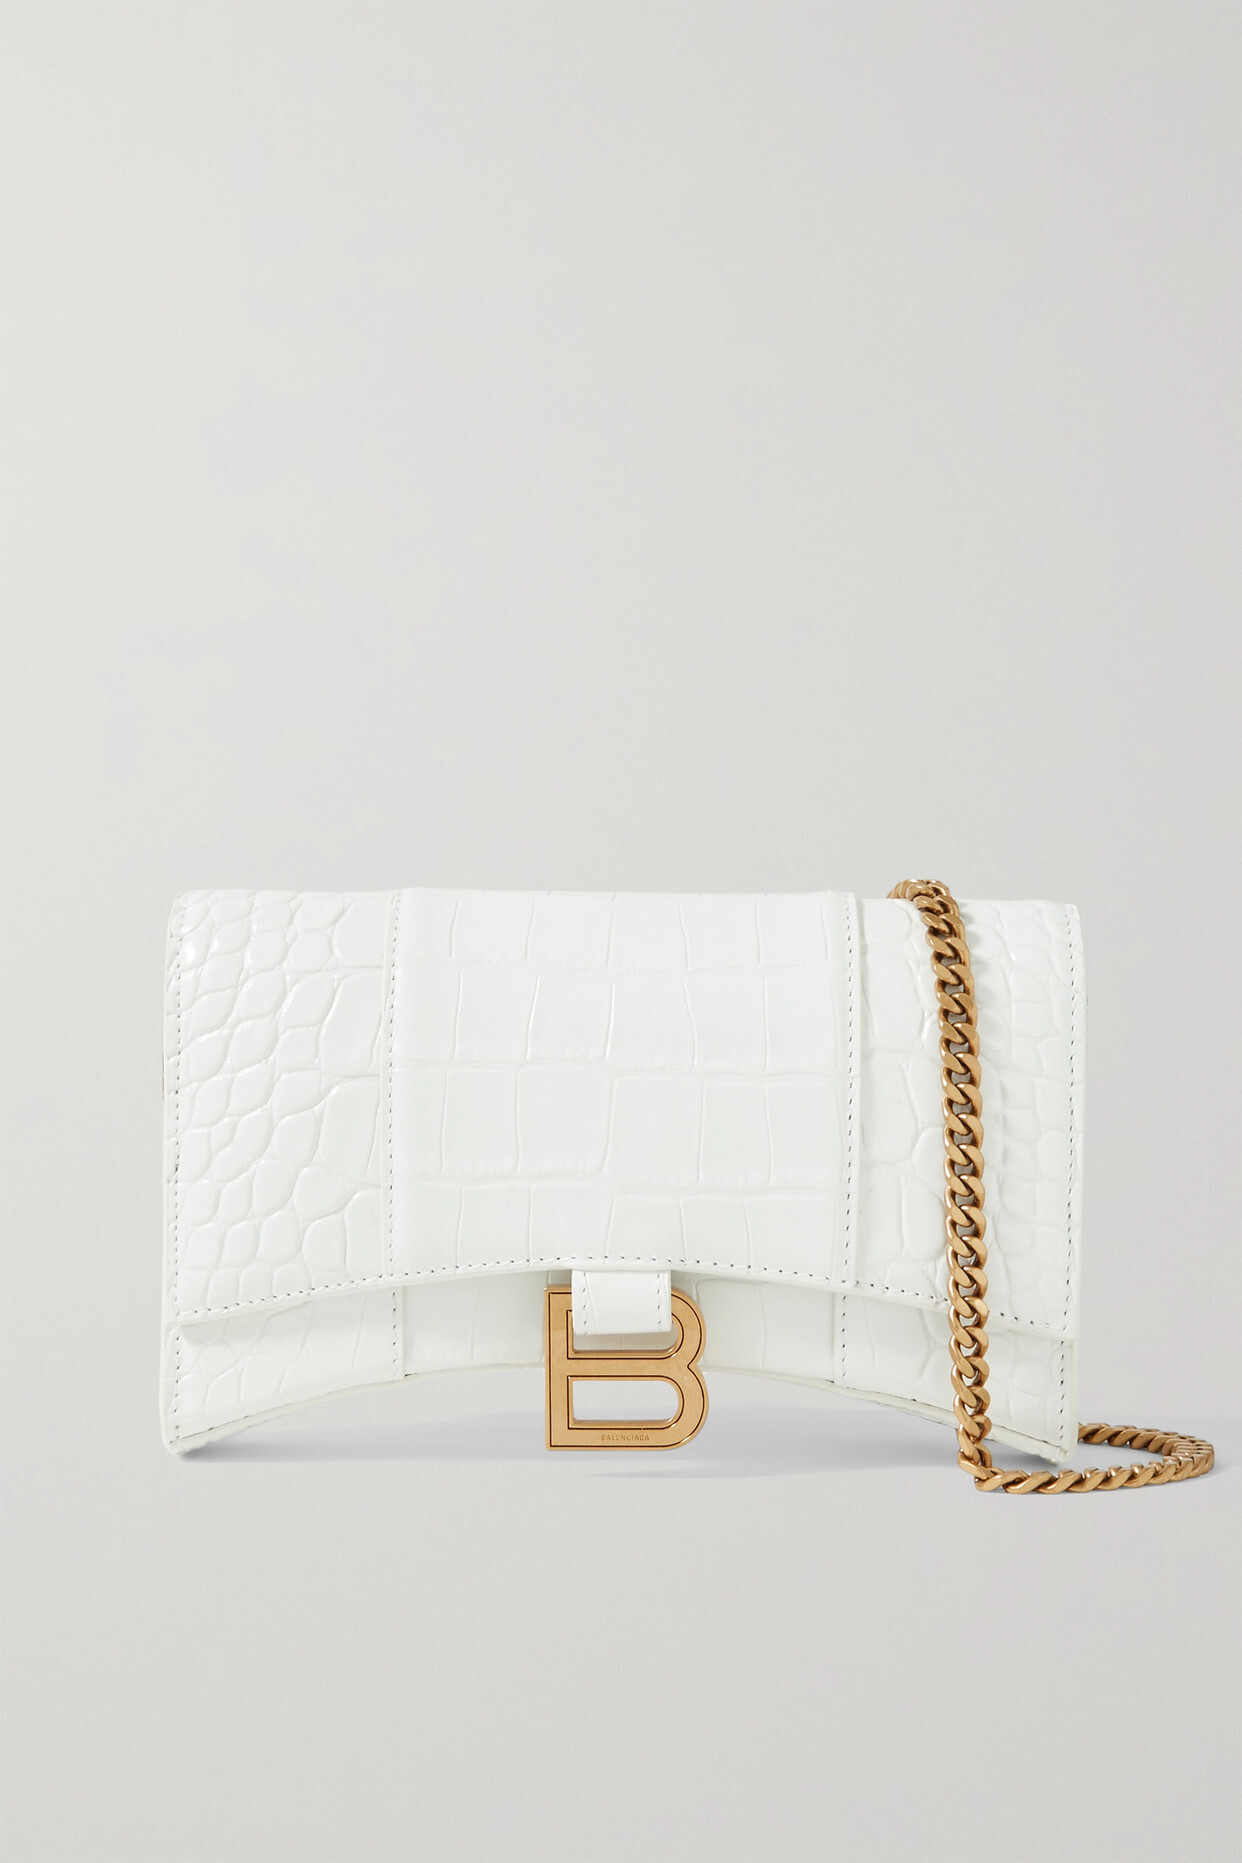 Balenciaga - Hourglass Croc-effect Leather Shoulder Bag - White